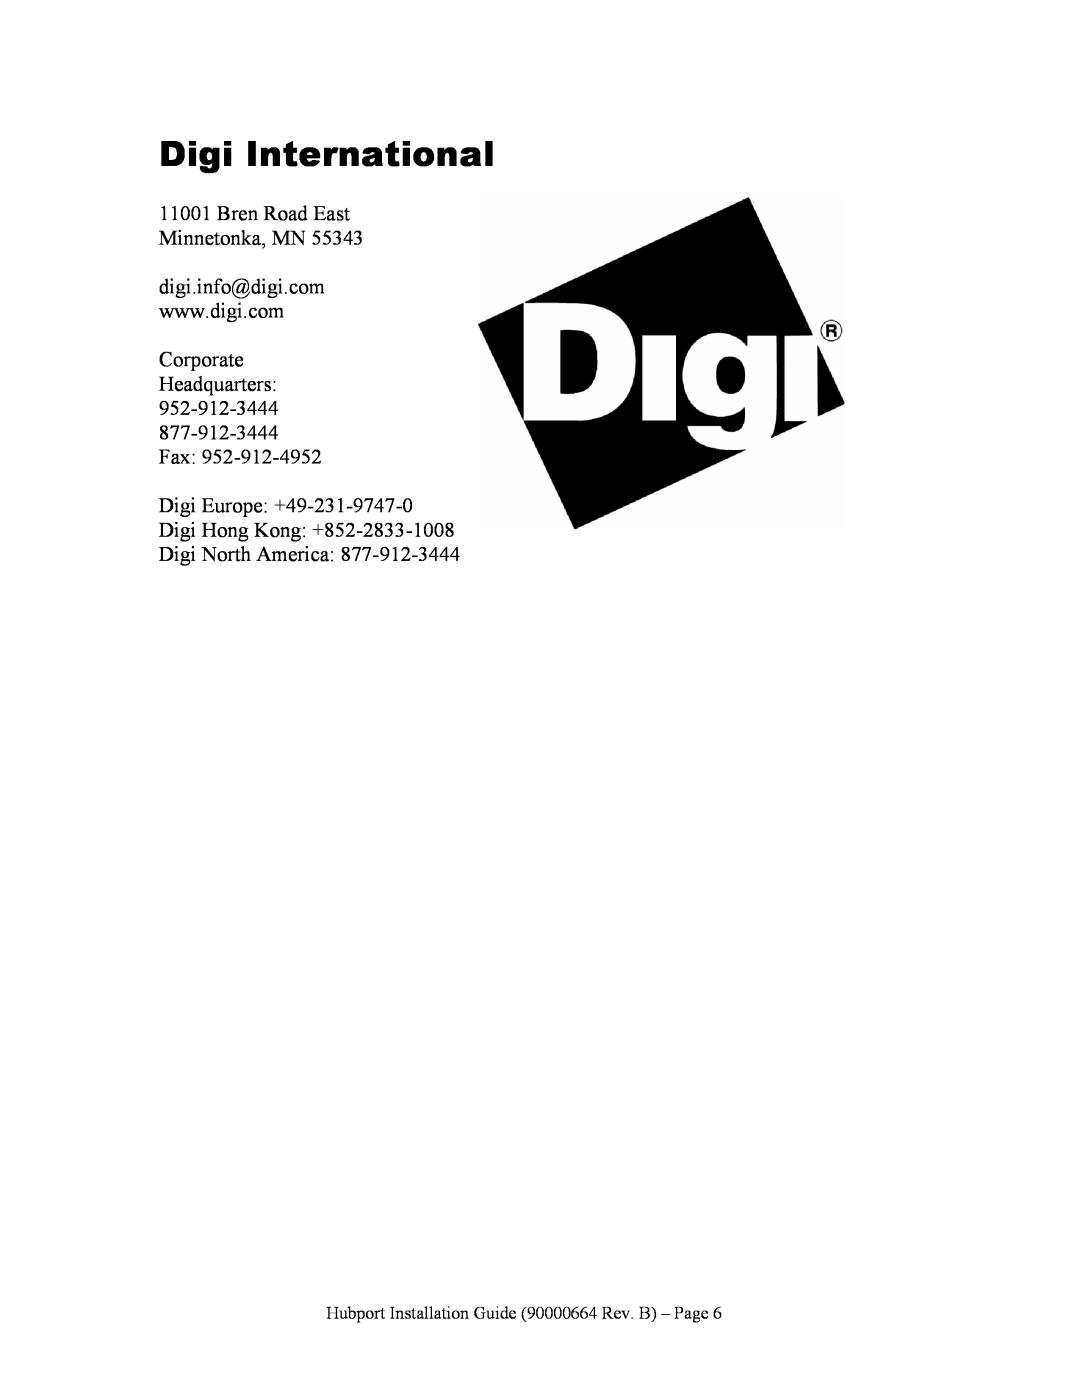 Digi Hubport/7c DC manual Digi International, Bren Road East Minnetonka, MN digi.info@digi.com, Corporate Headquarters 